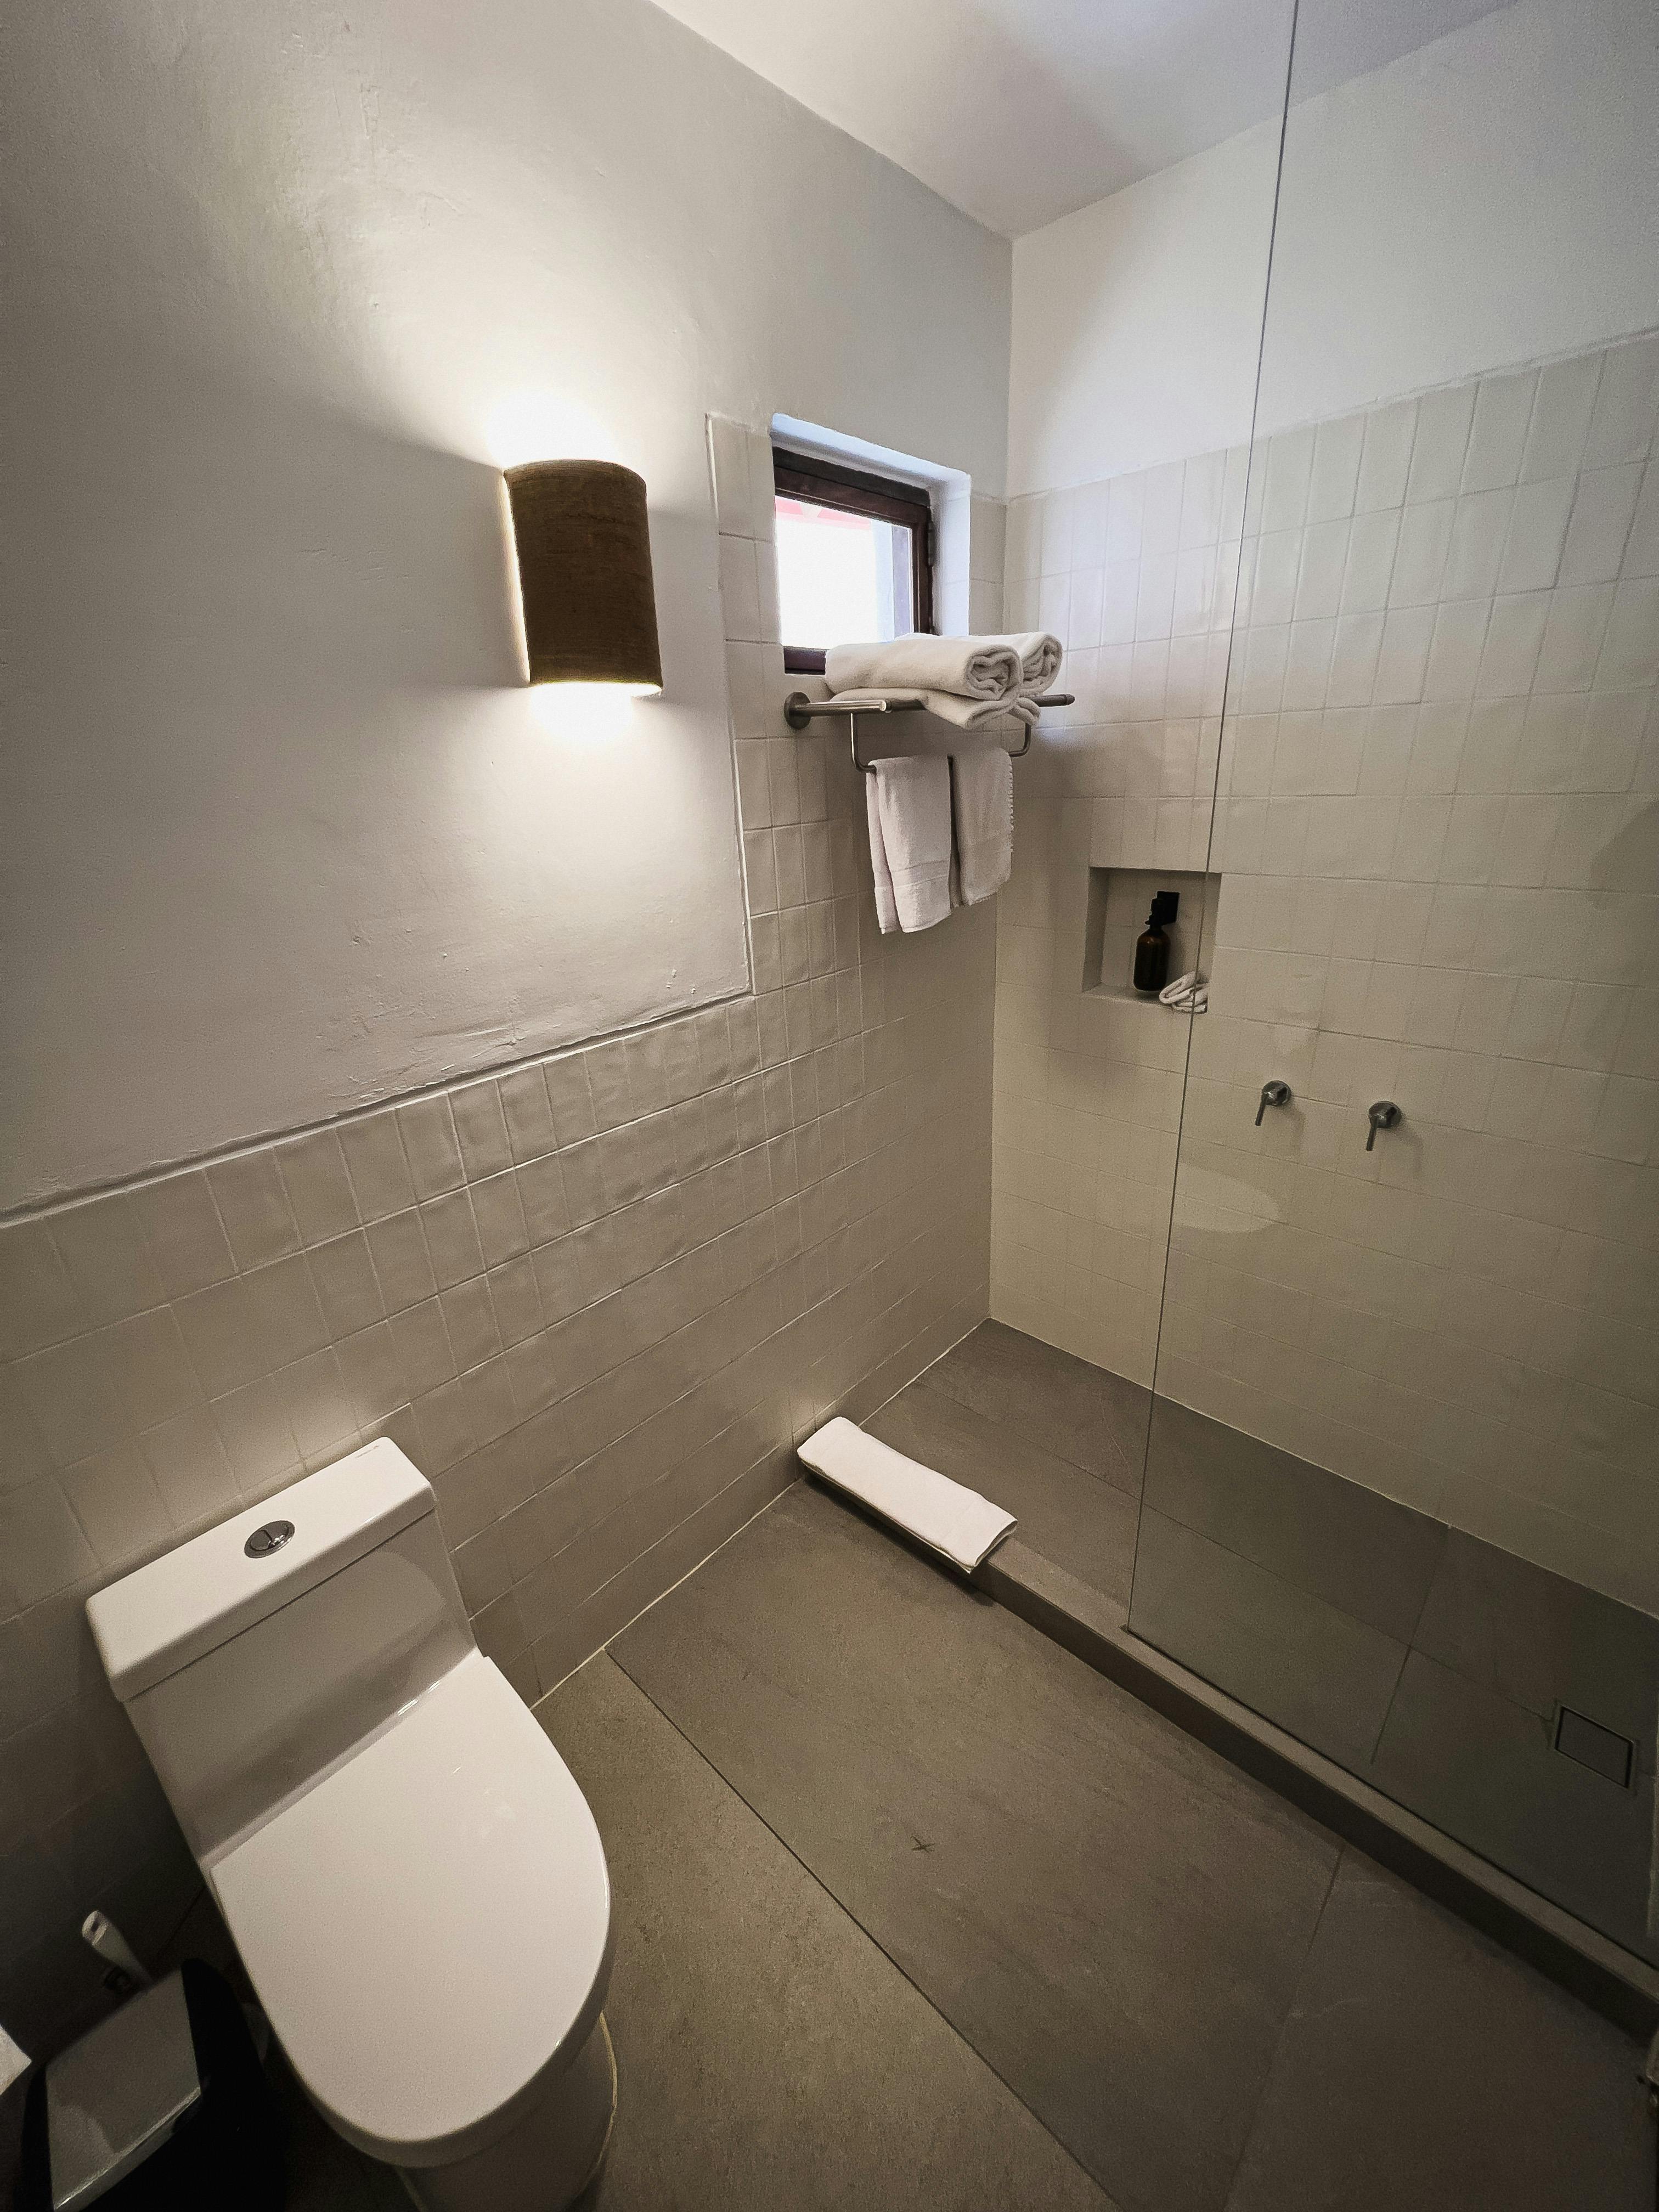 Habitacion superior balcon privado baño ducha agua caliente 24 horas calefaccion centralizada wifi gratis